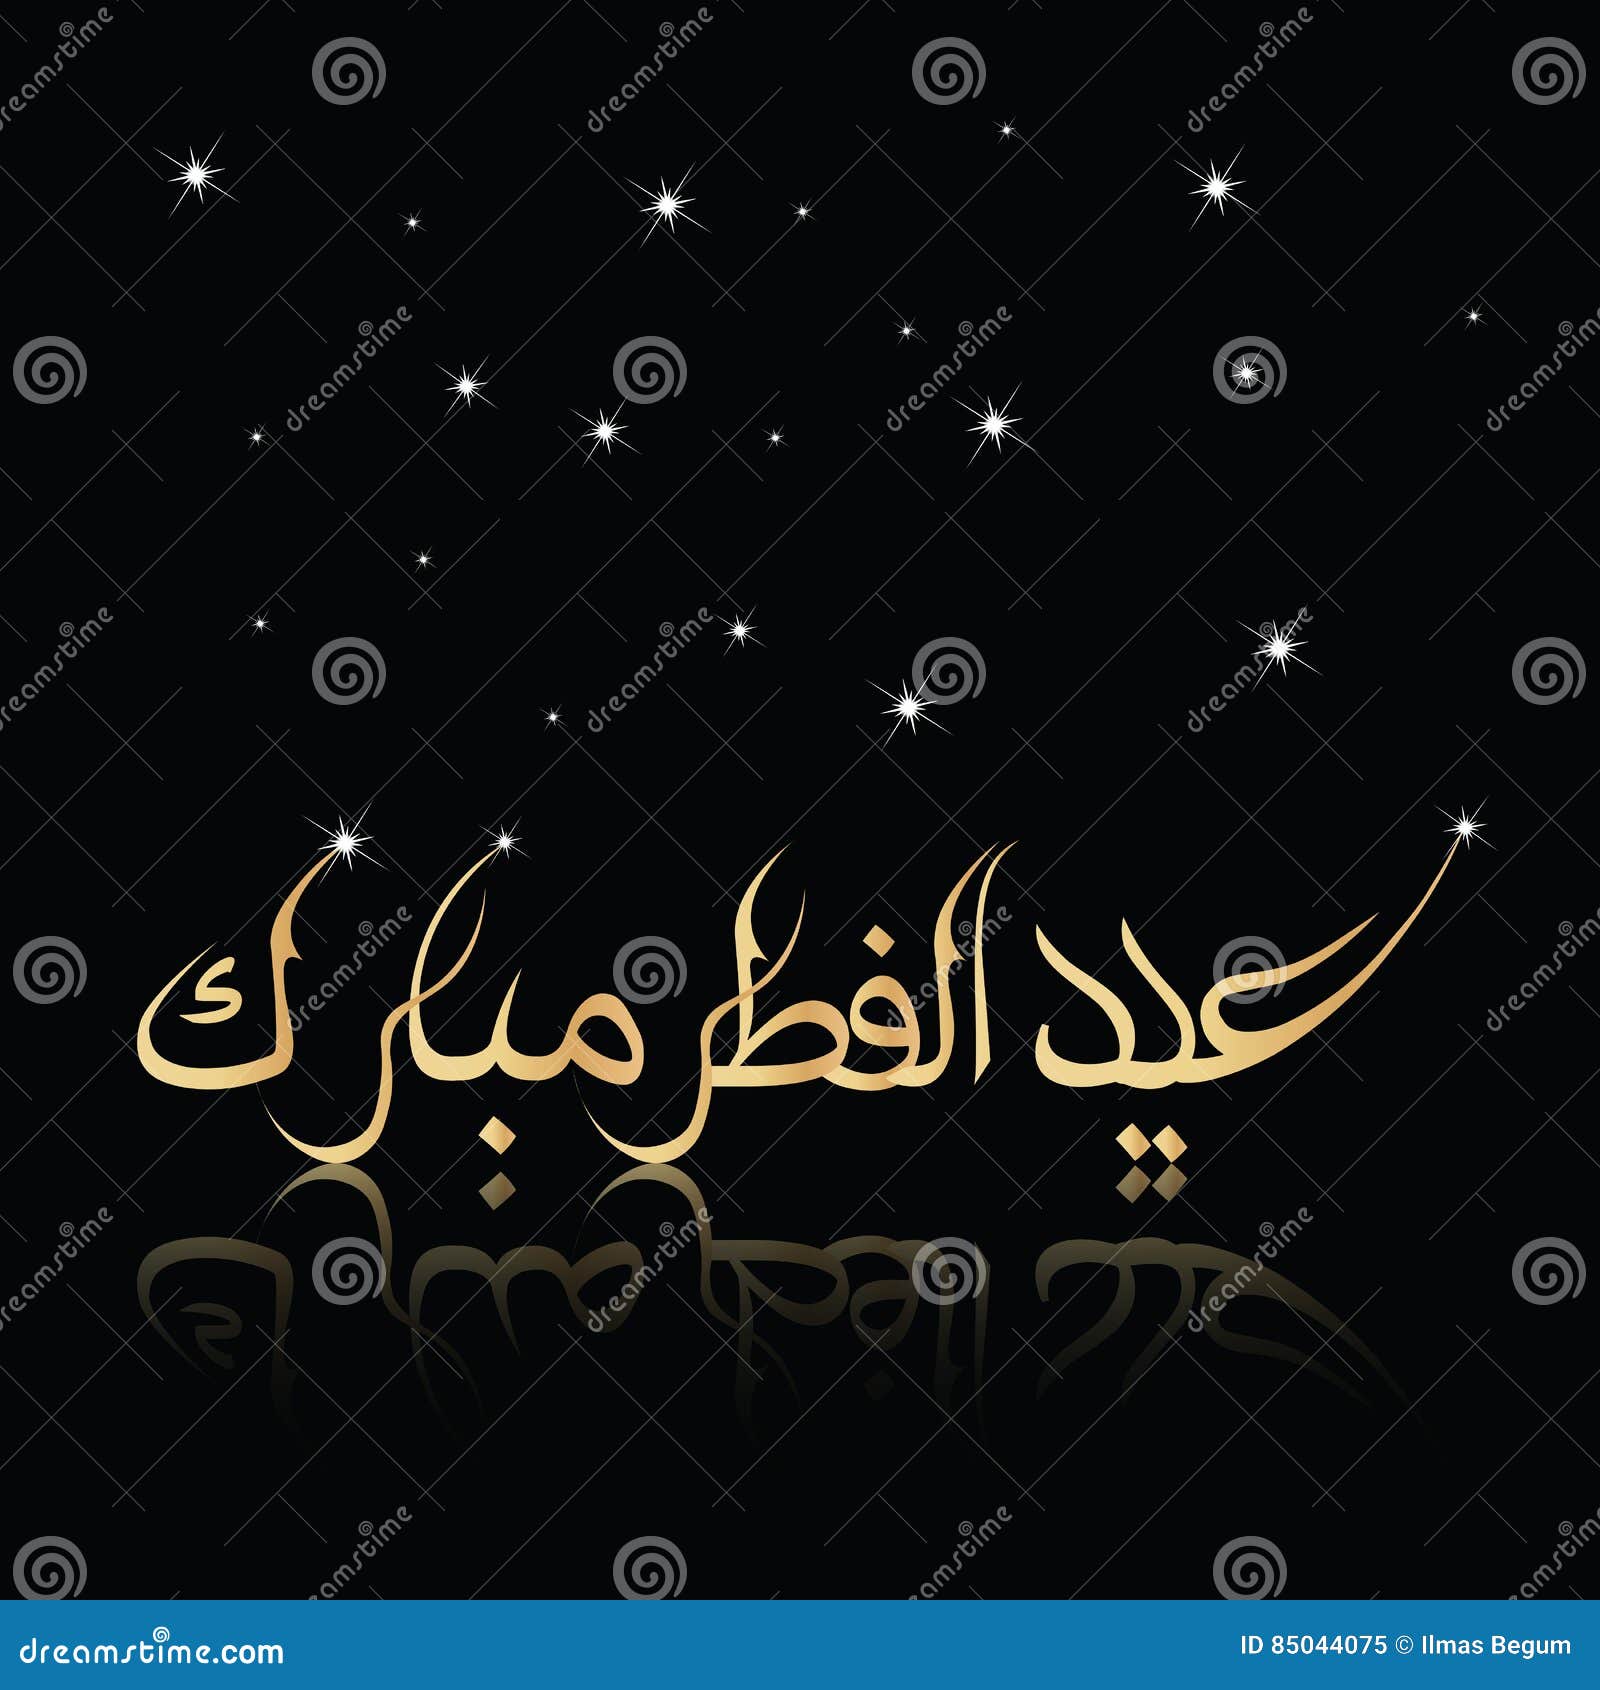 Eid-ul-Fitr Background stock vector. Illustration of bakra - 85044075